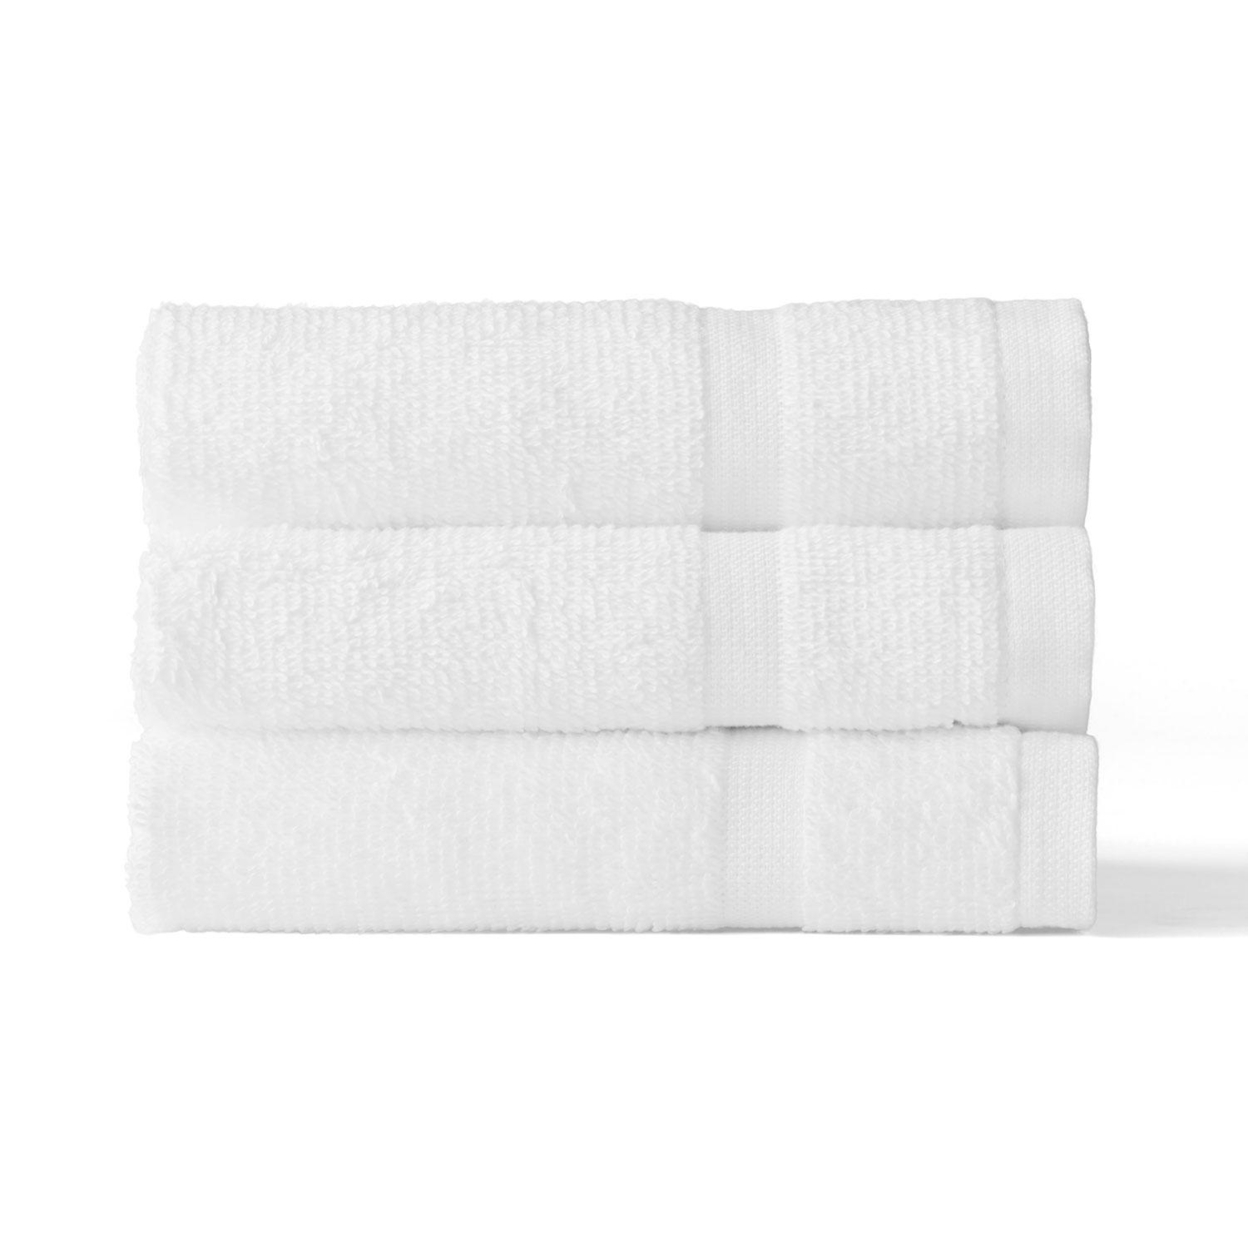 Member's Mark Commercial Hospitality Washcloths, White (24 Count)